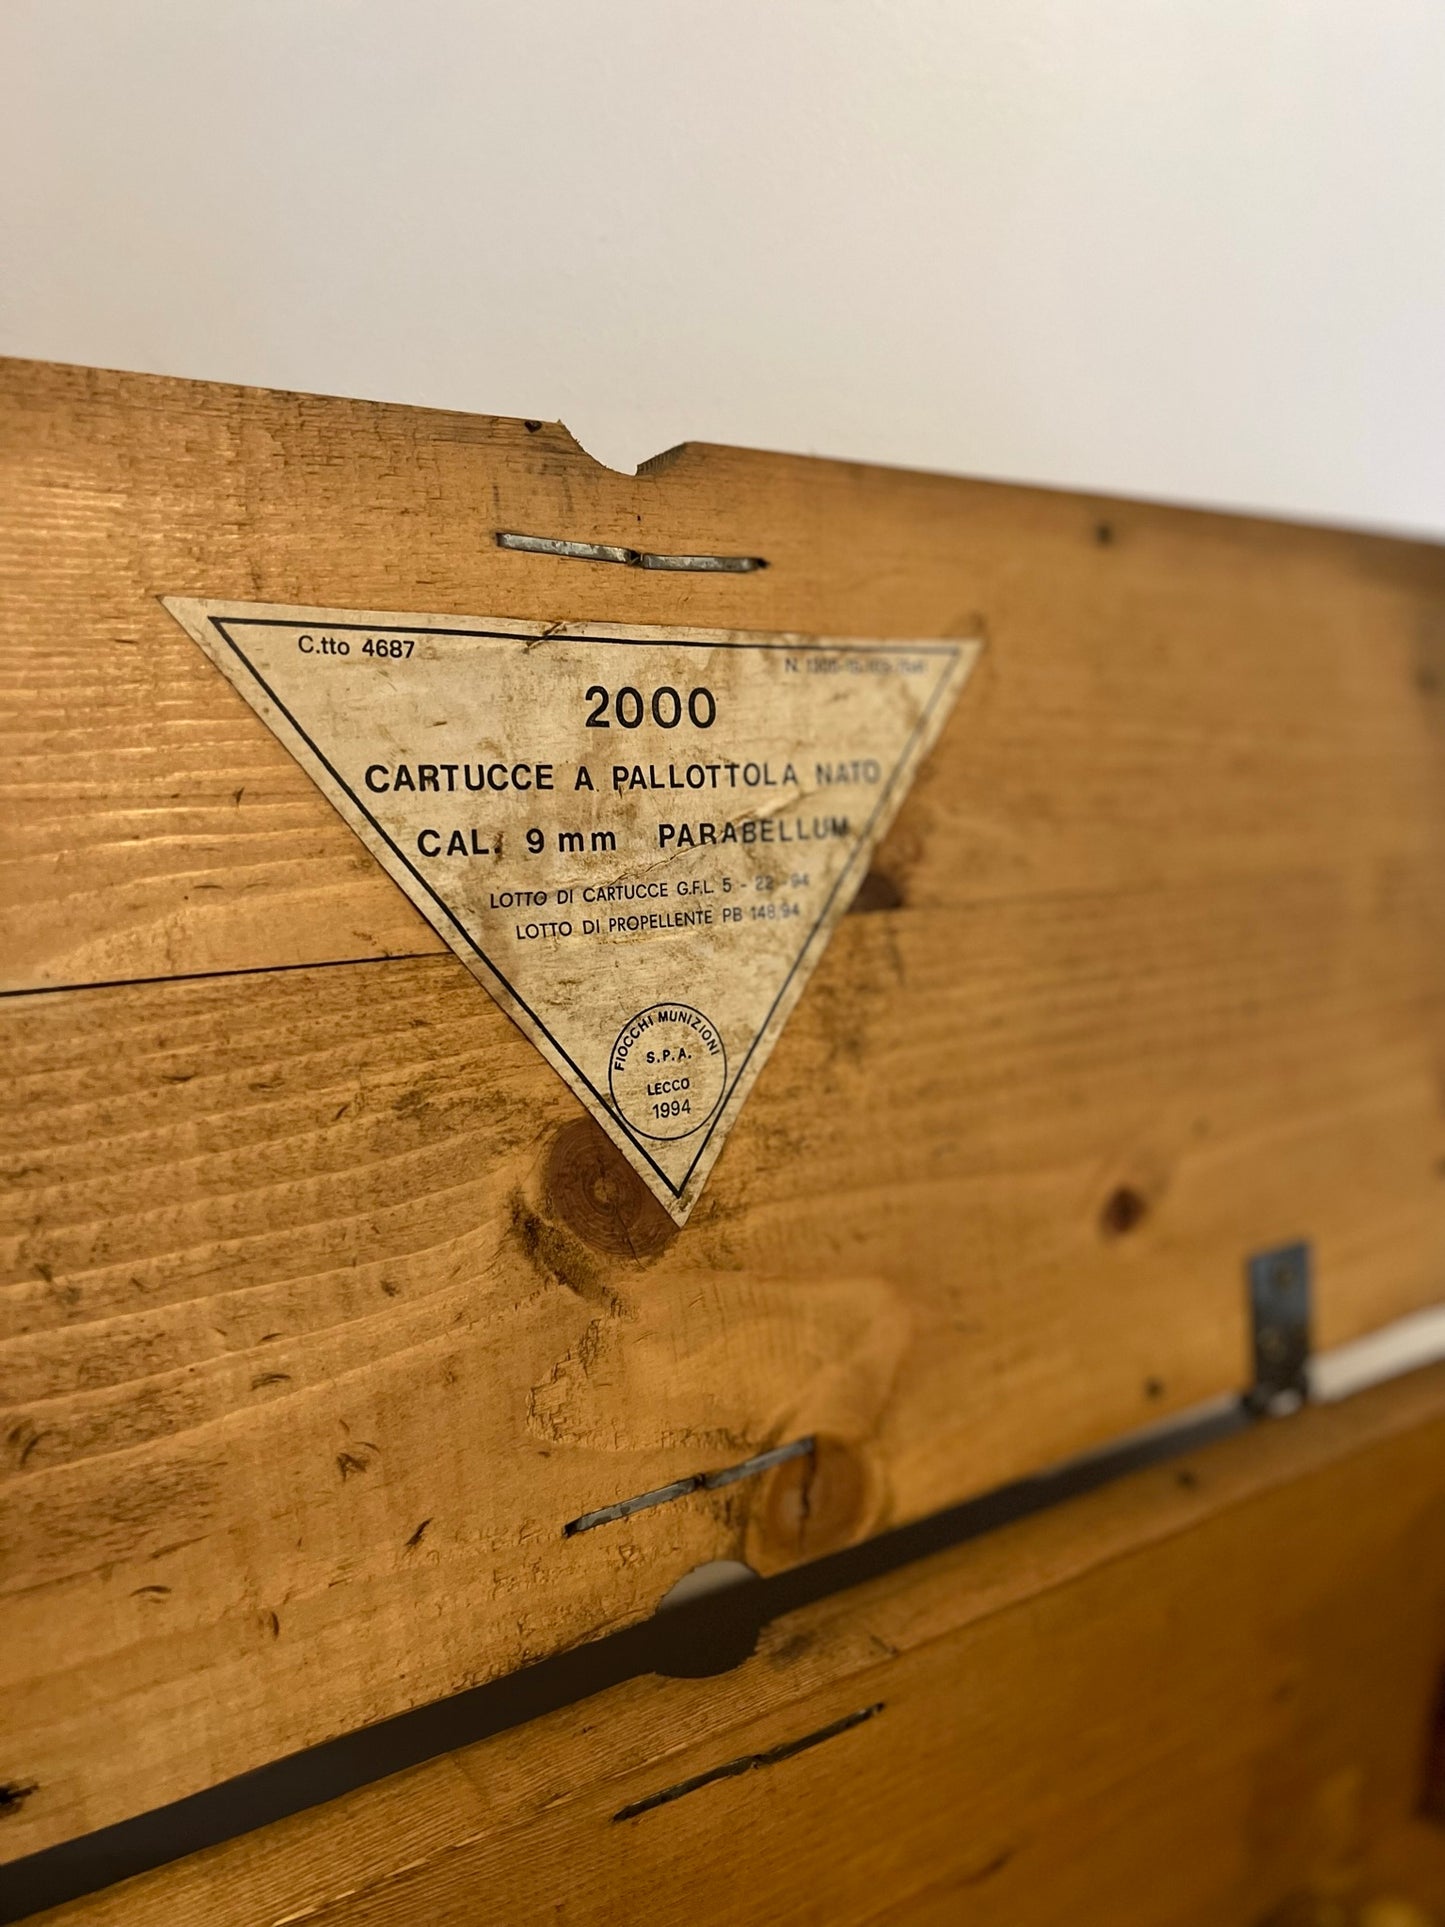 Wooden Ammo Box Vintage Army Rustic Industrial Chest Tool Box Storage Box Keepsake Memory